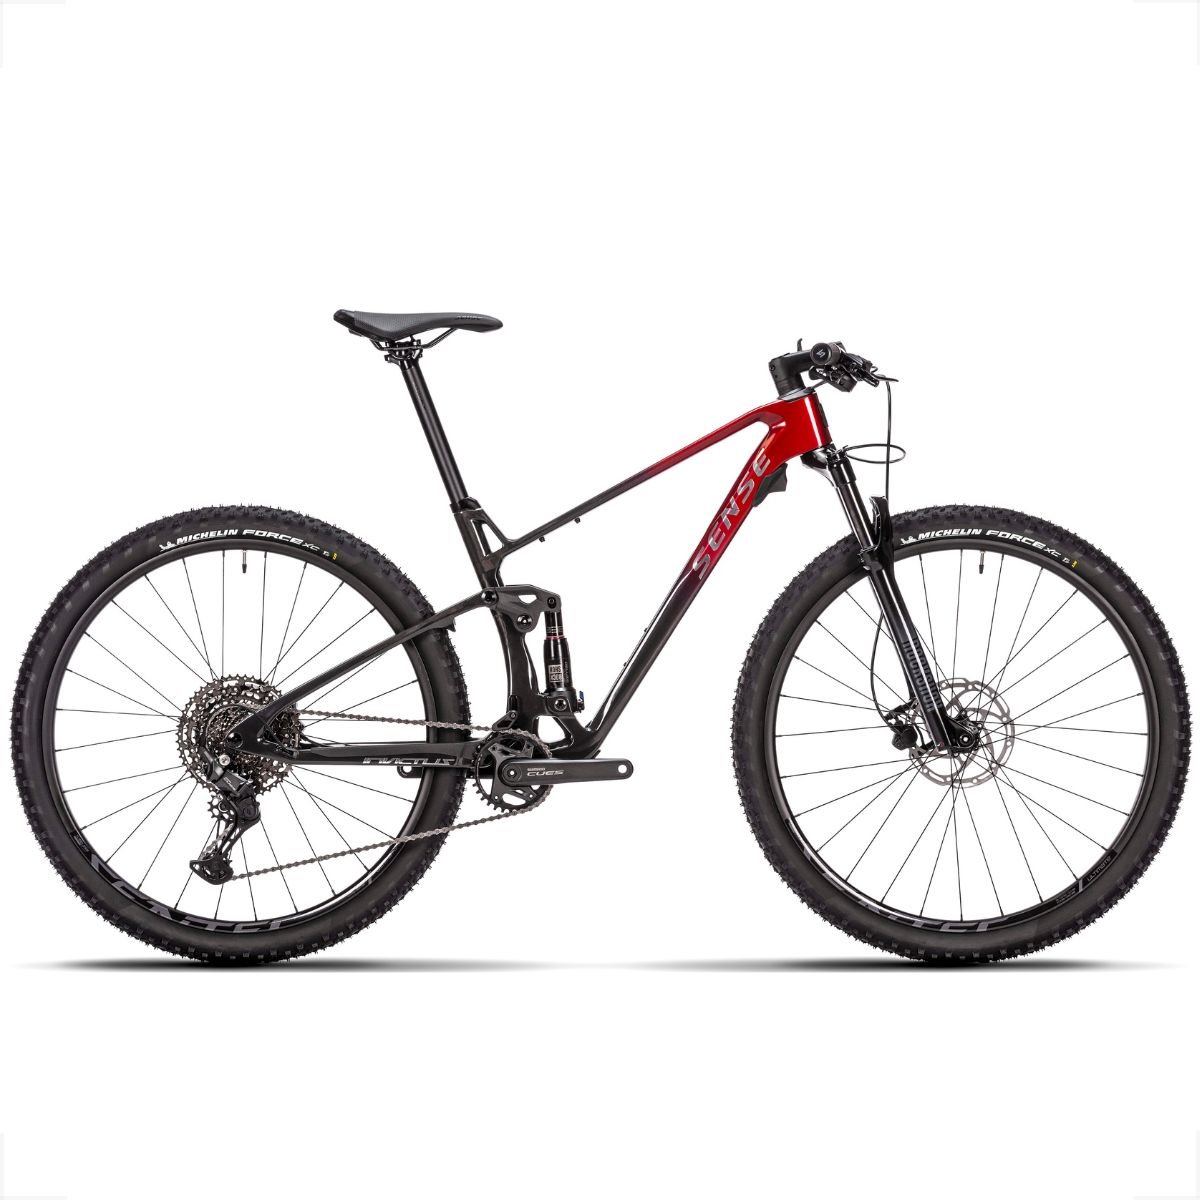 Bicicleta Full Sense Invictus Sport Carbono Shimano Cues:vermelho+preto/19 - 2